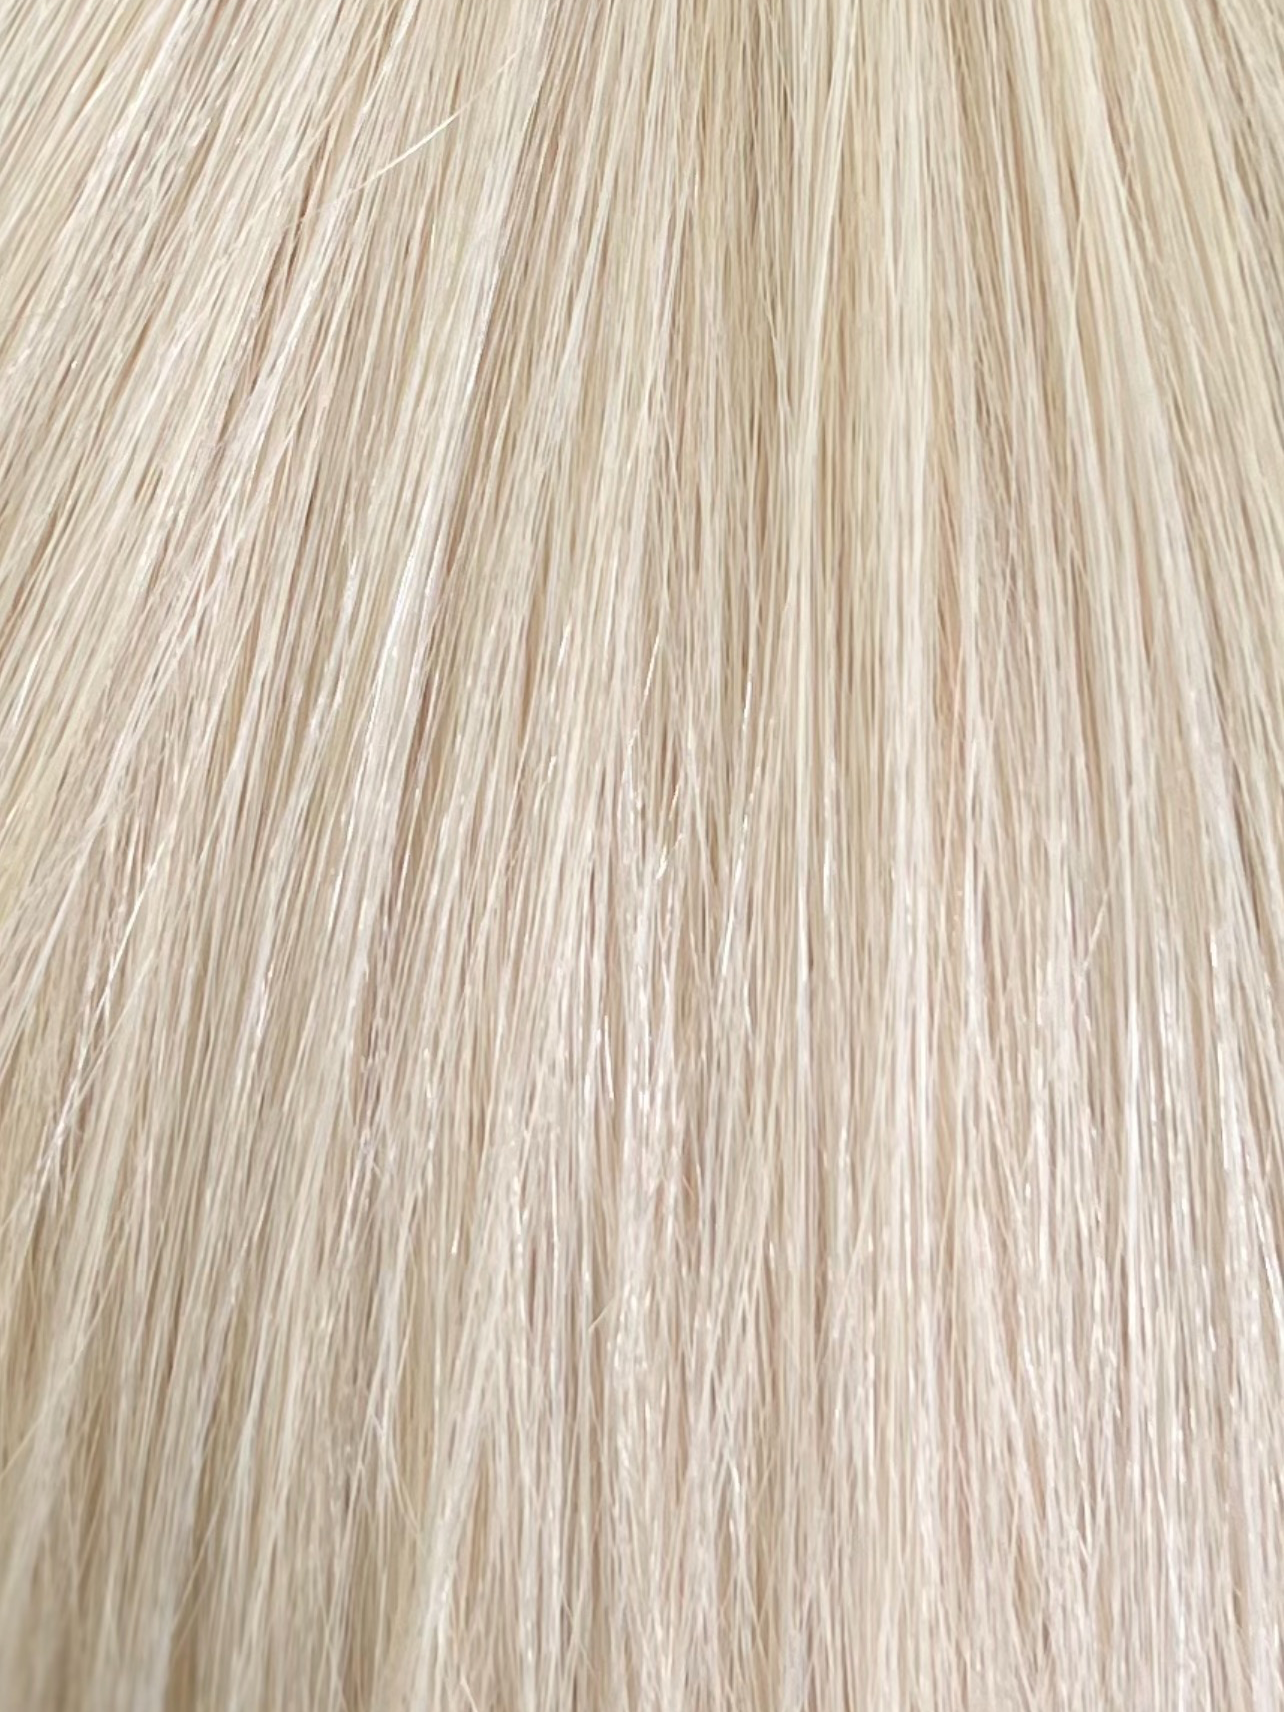 '50G' WEFT HAIR-1001 Barbie Blonde